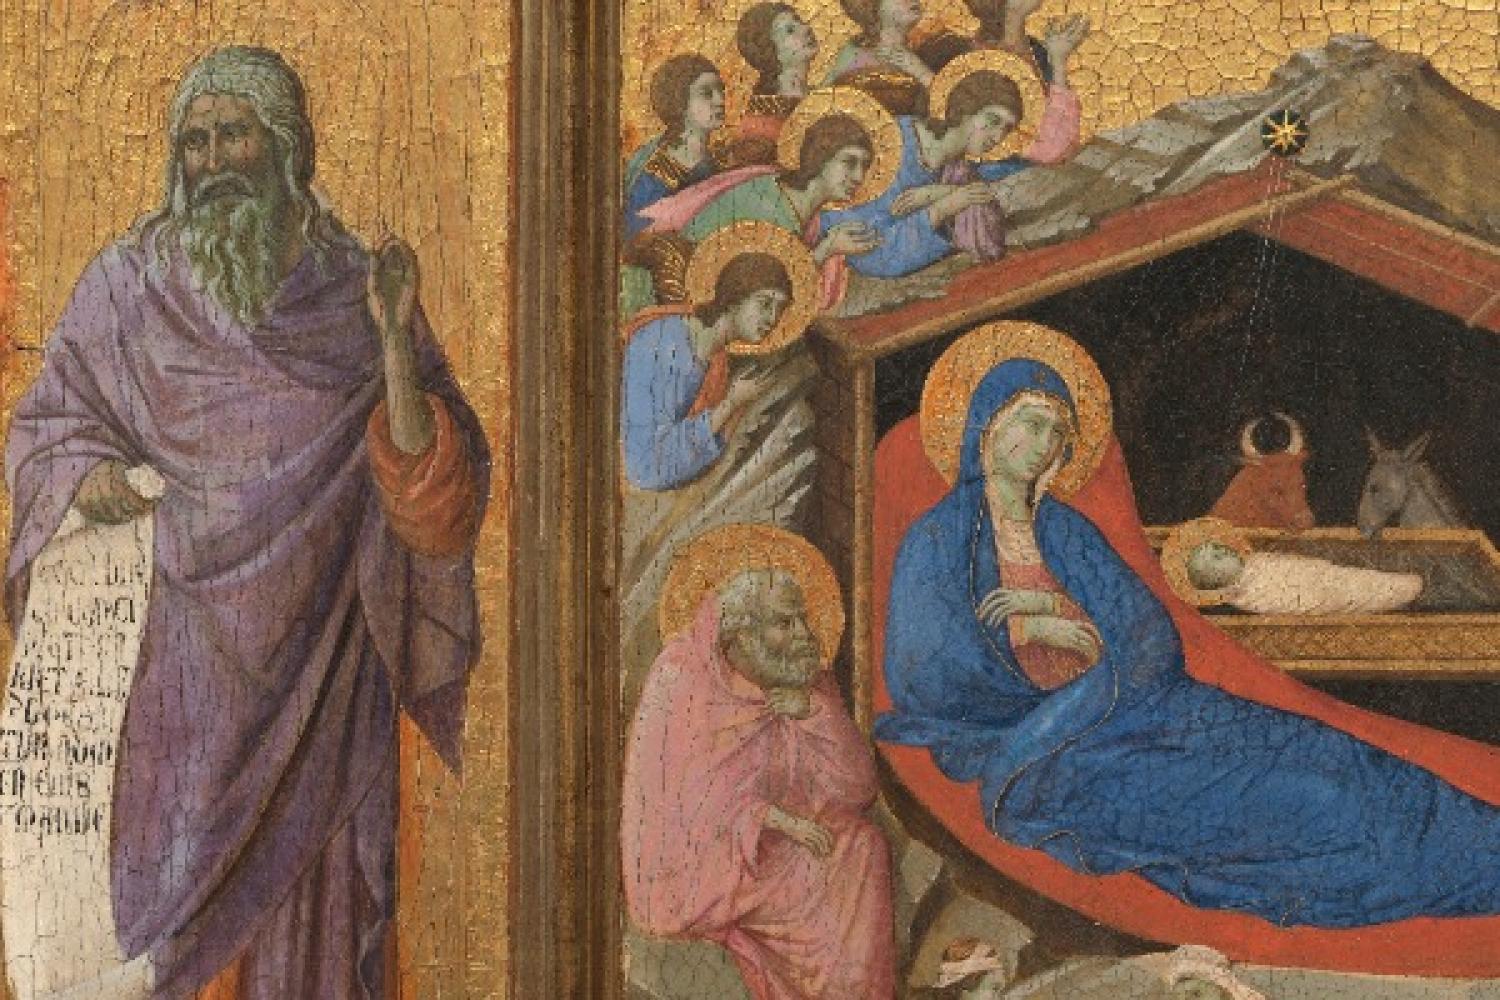 Duccio's "Nativity" and prophet Ezekiel on the Maesta